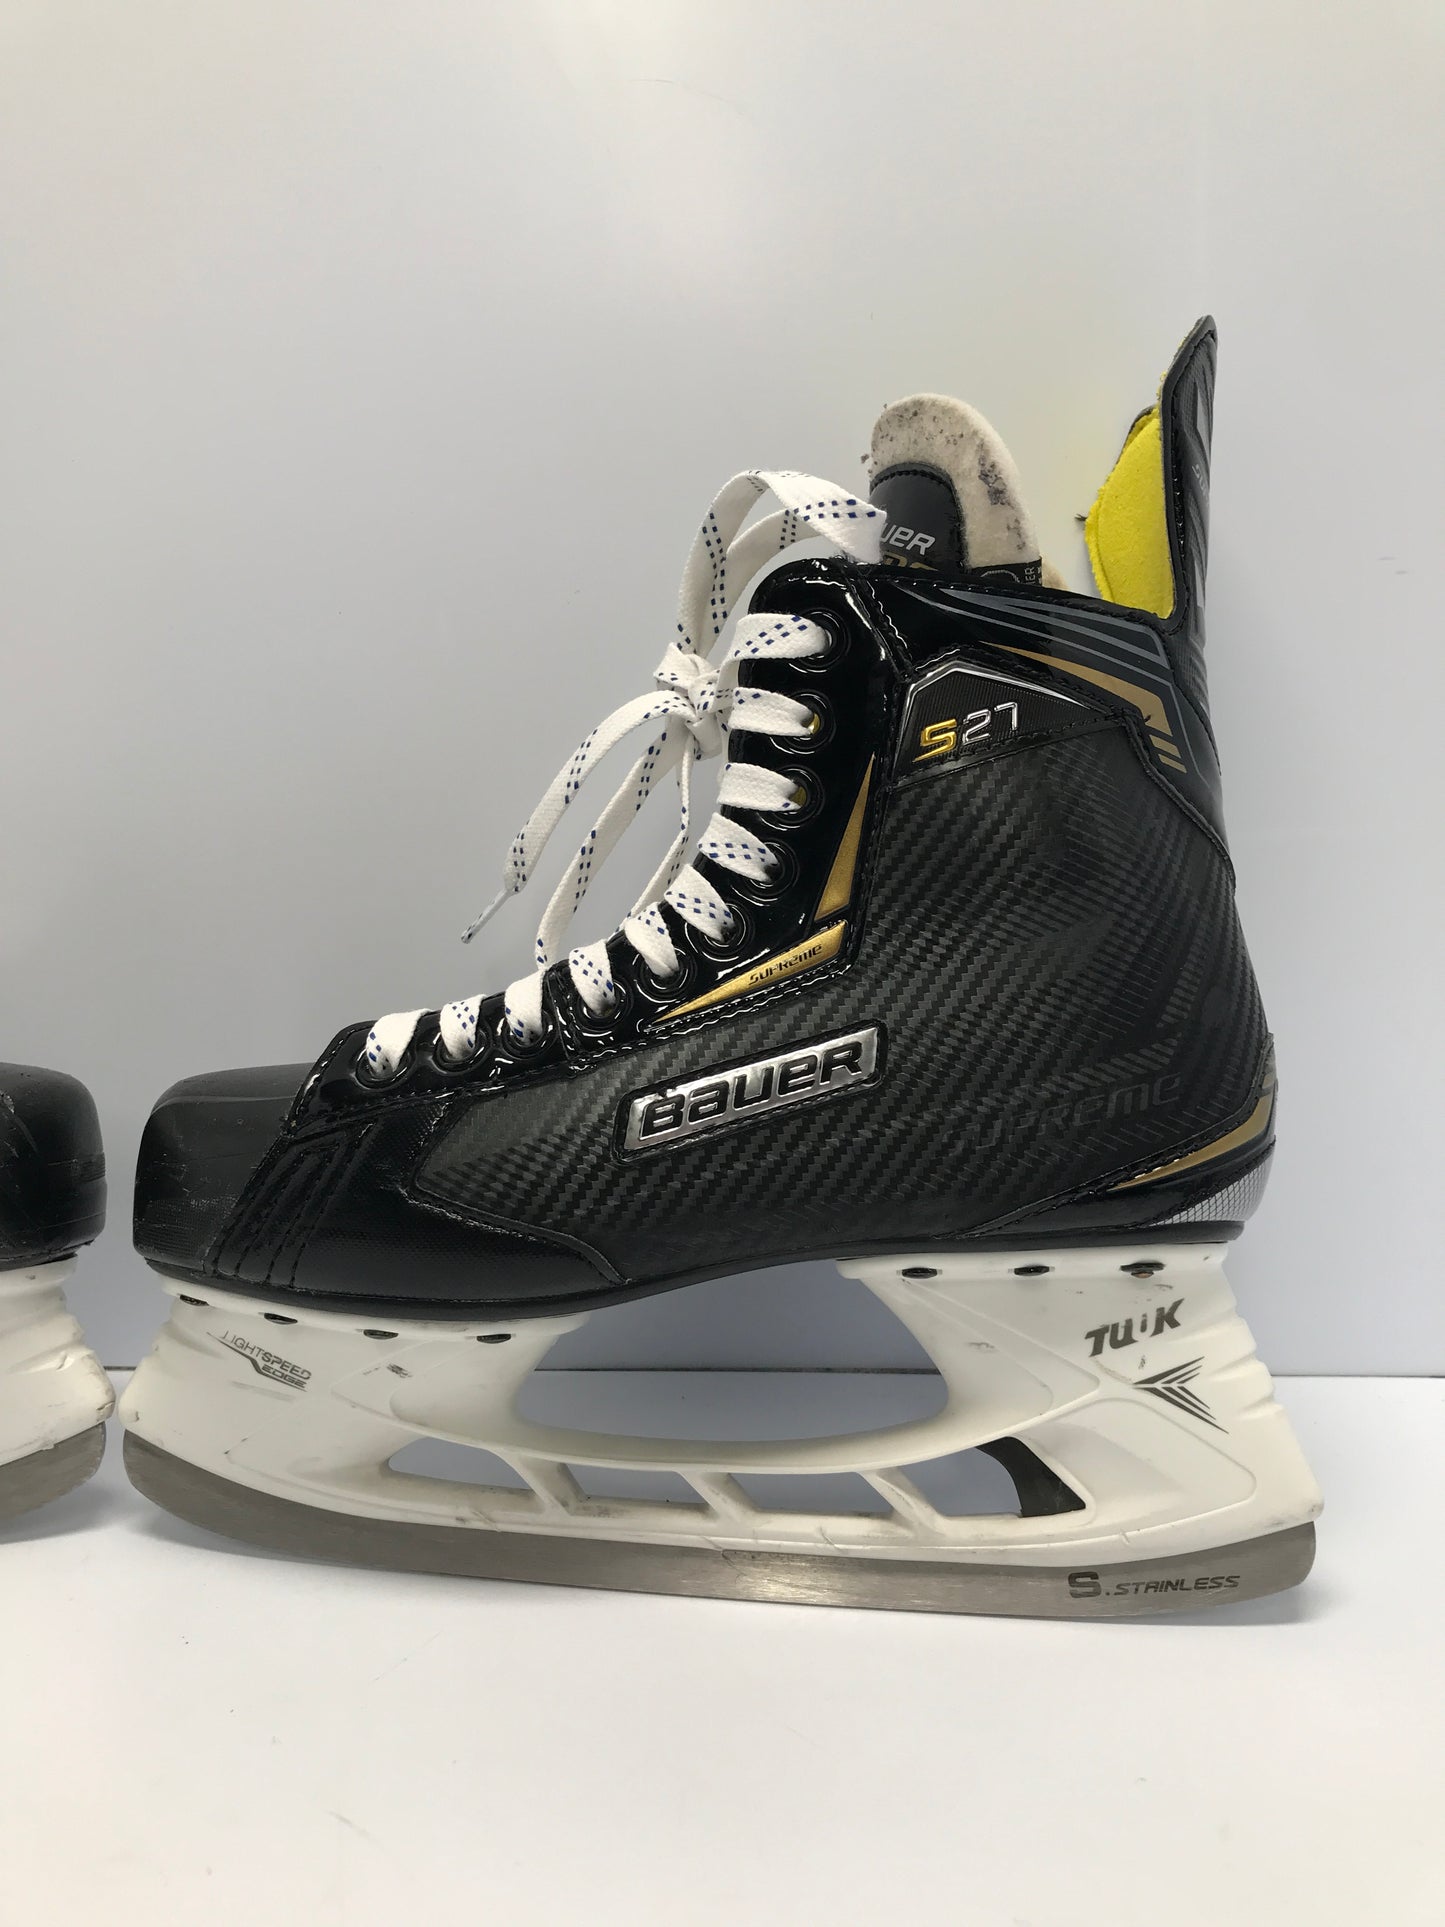 Hockey Skates Men's Senior Size 7.5 Shoe Size 6 Bauer Supreme S27 Outstanding Quality